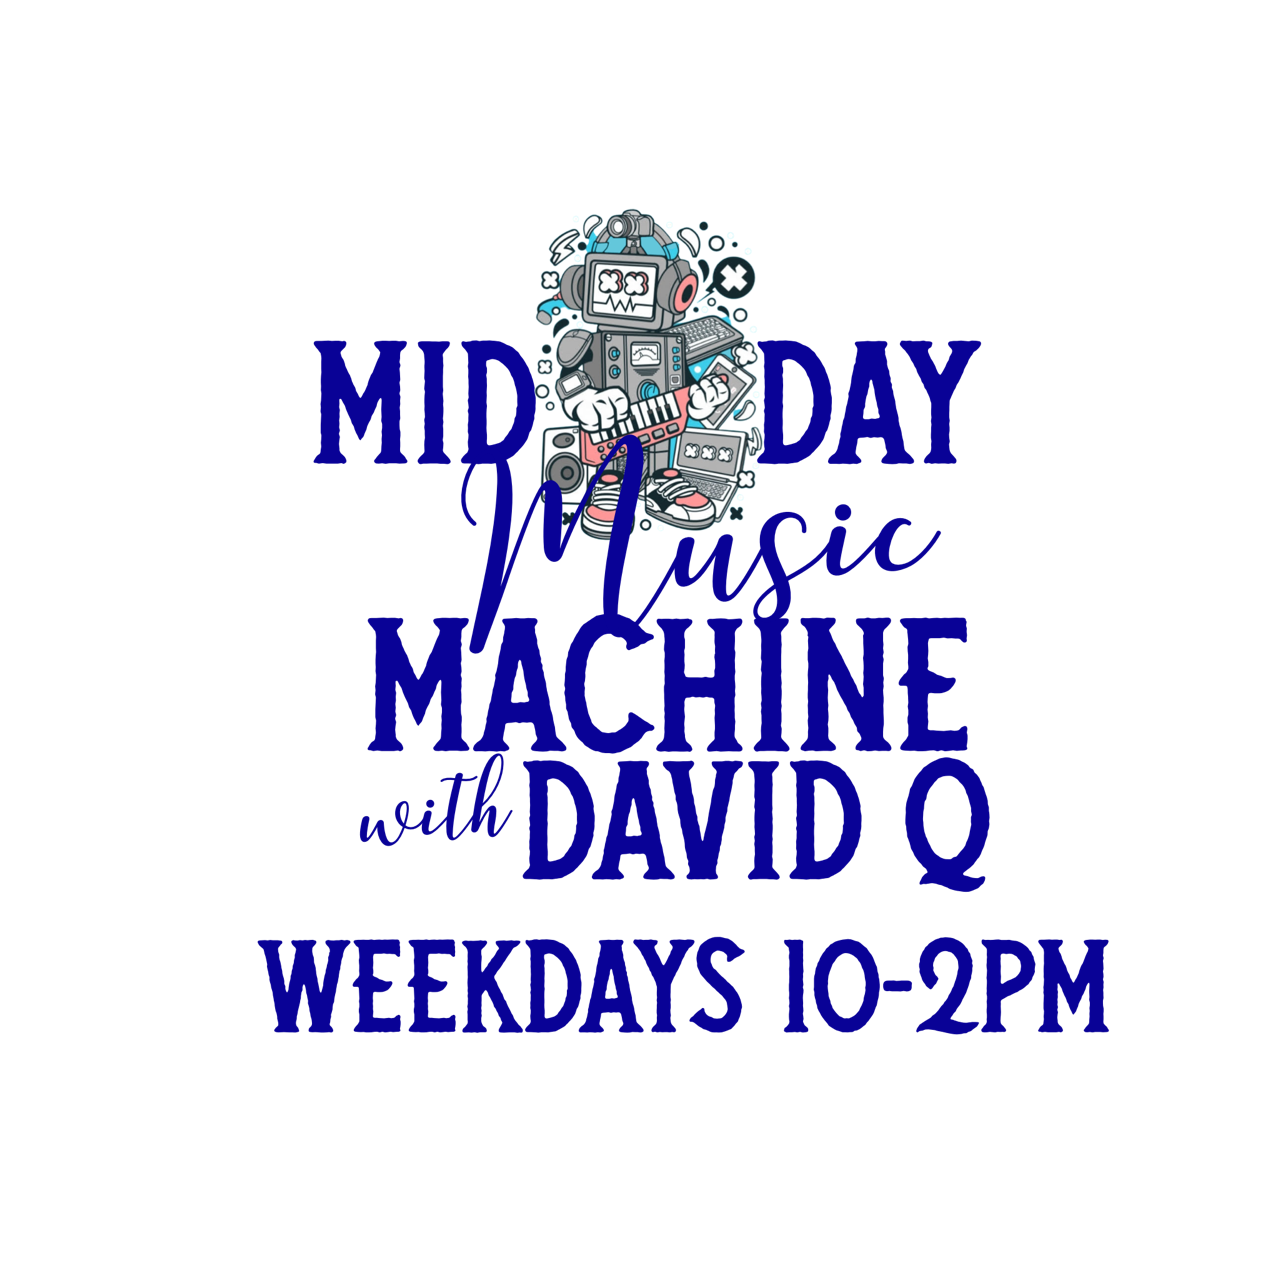 Midday music machine with David Q banner